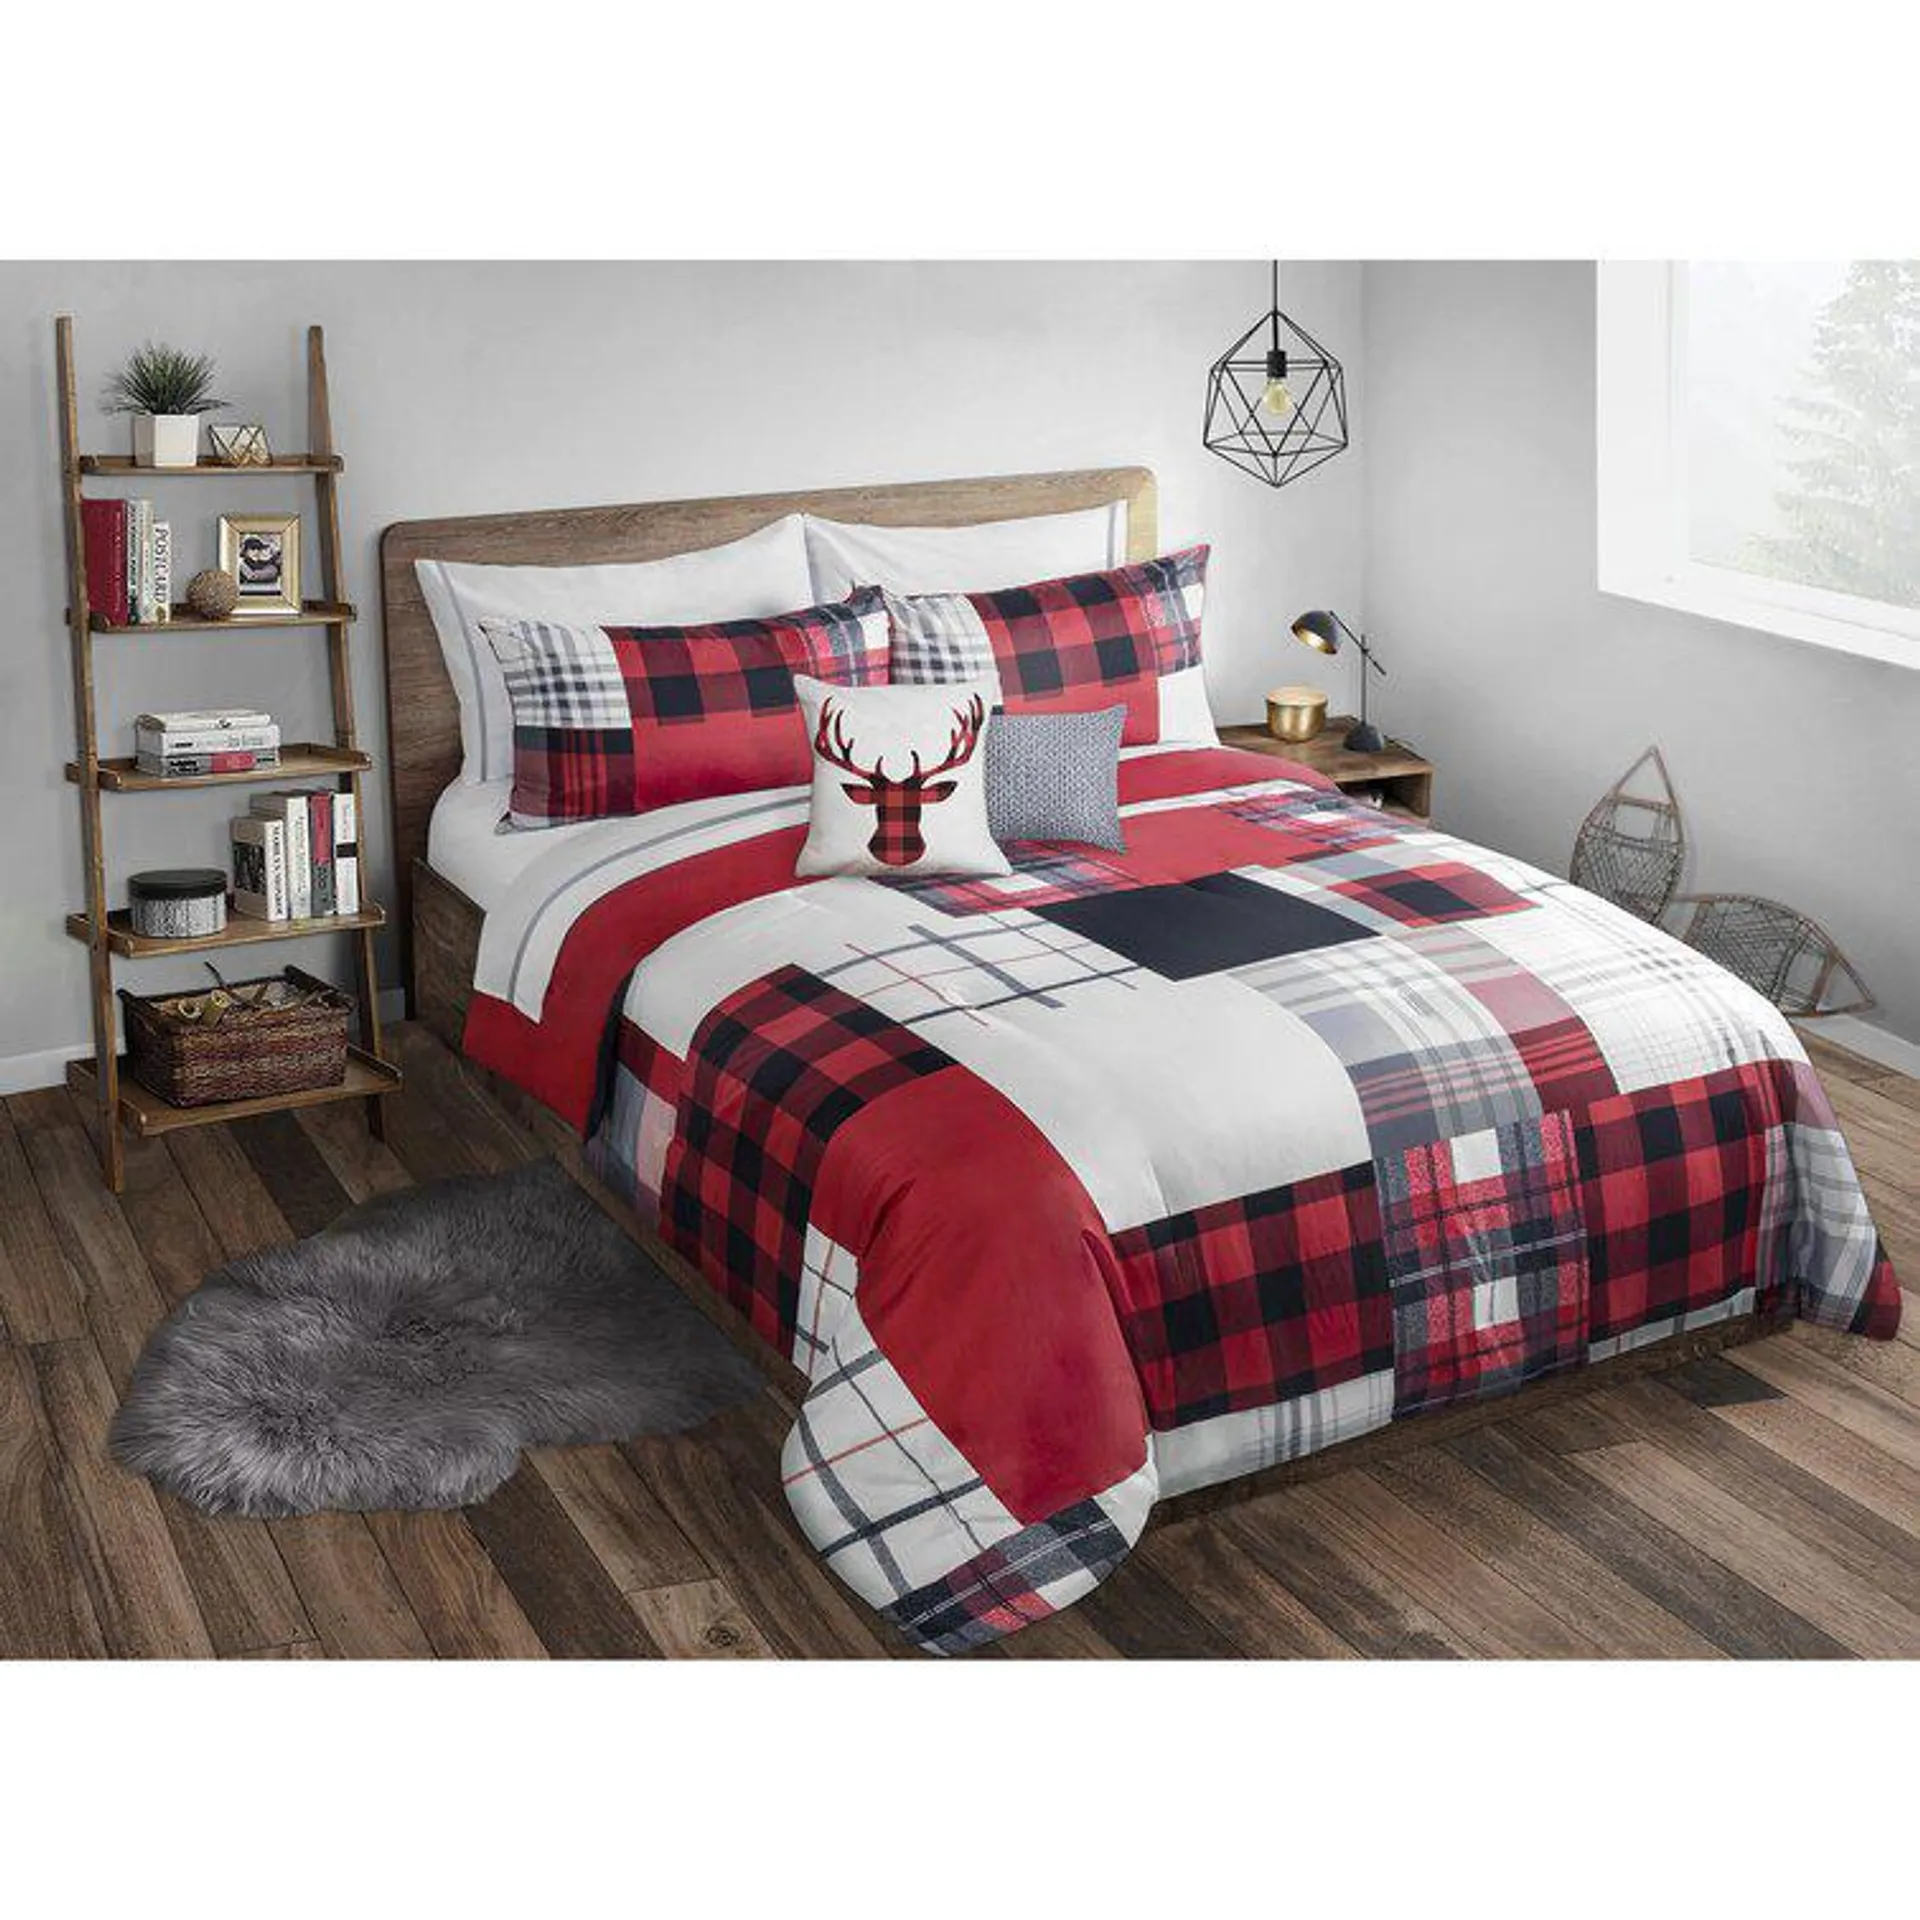 Kayia Red/Black/White Microfiber Comforter Set